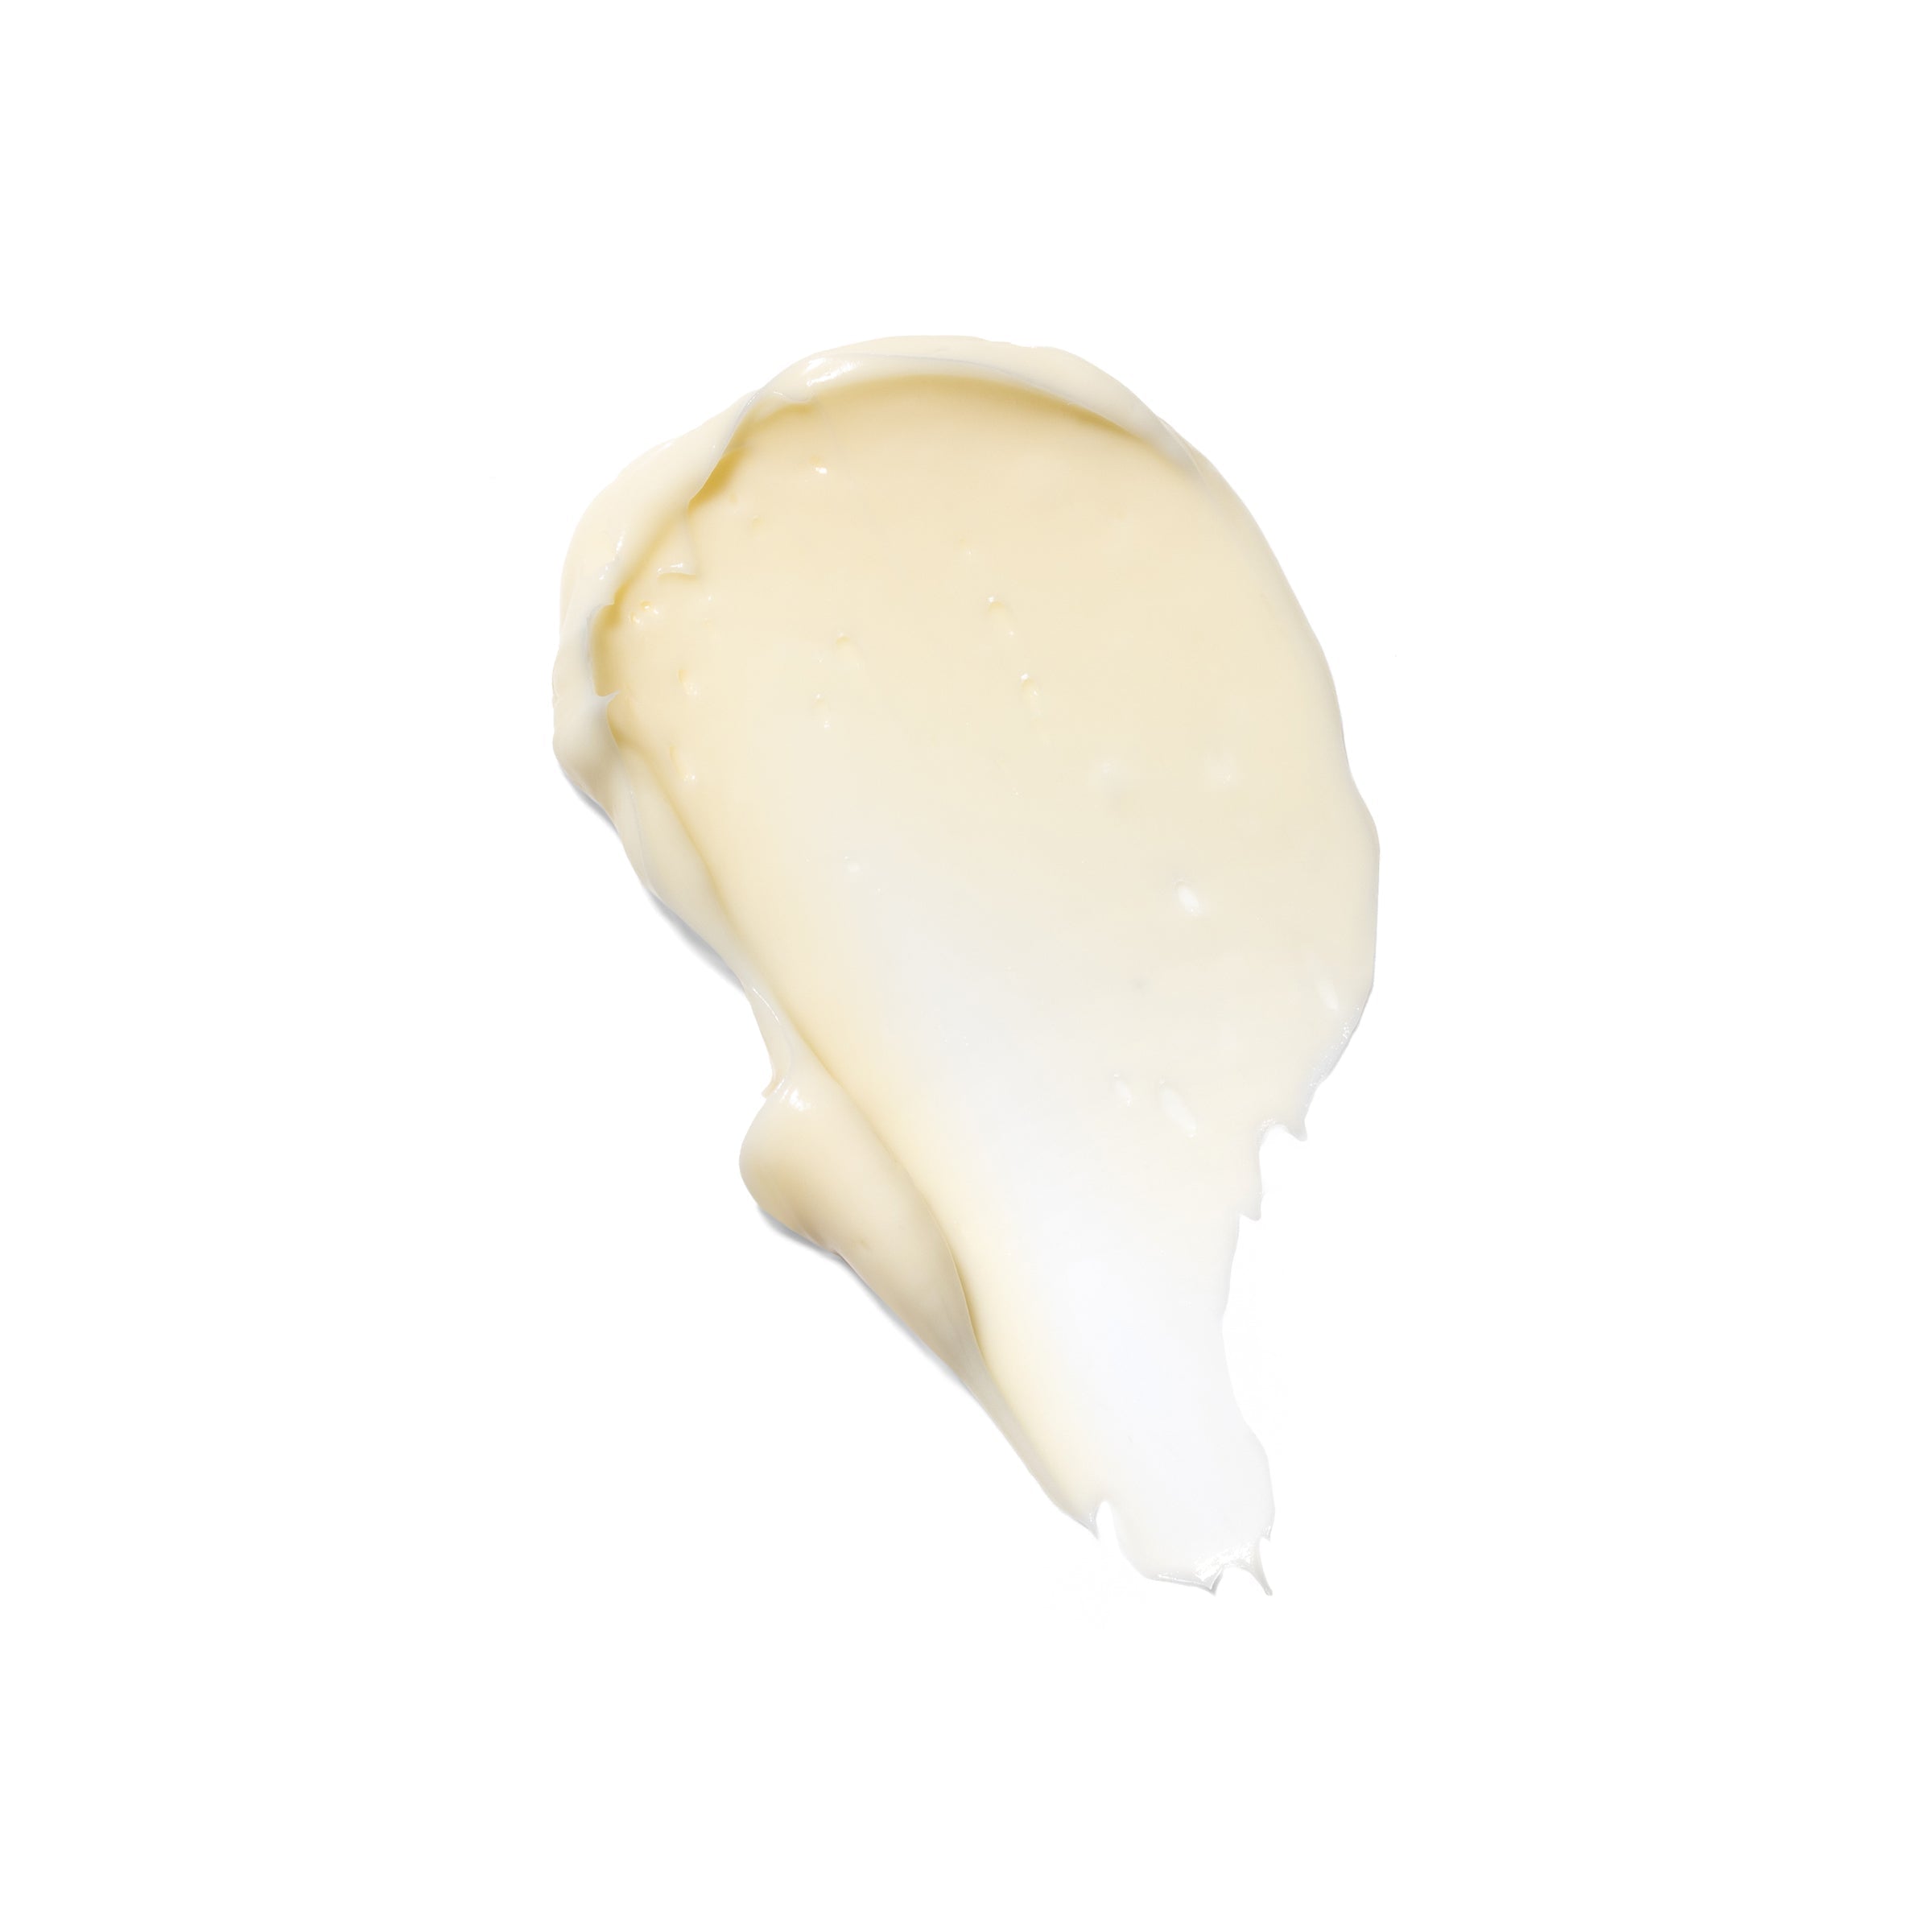 A close up of a smear of the Farmacy Honey Halo